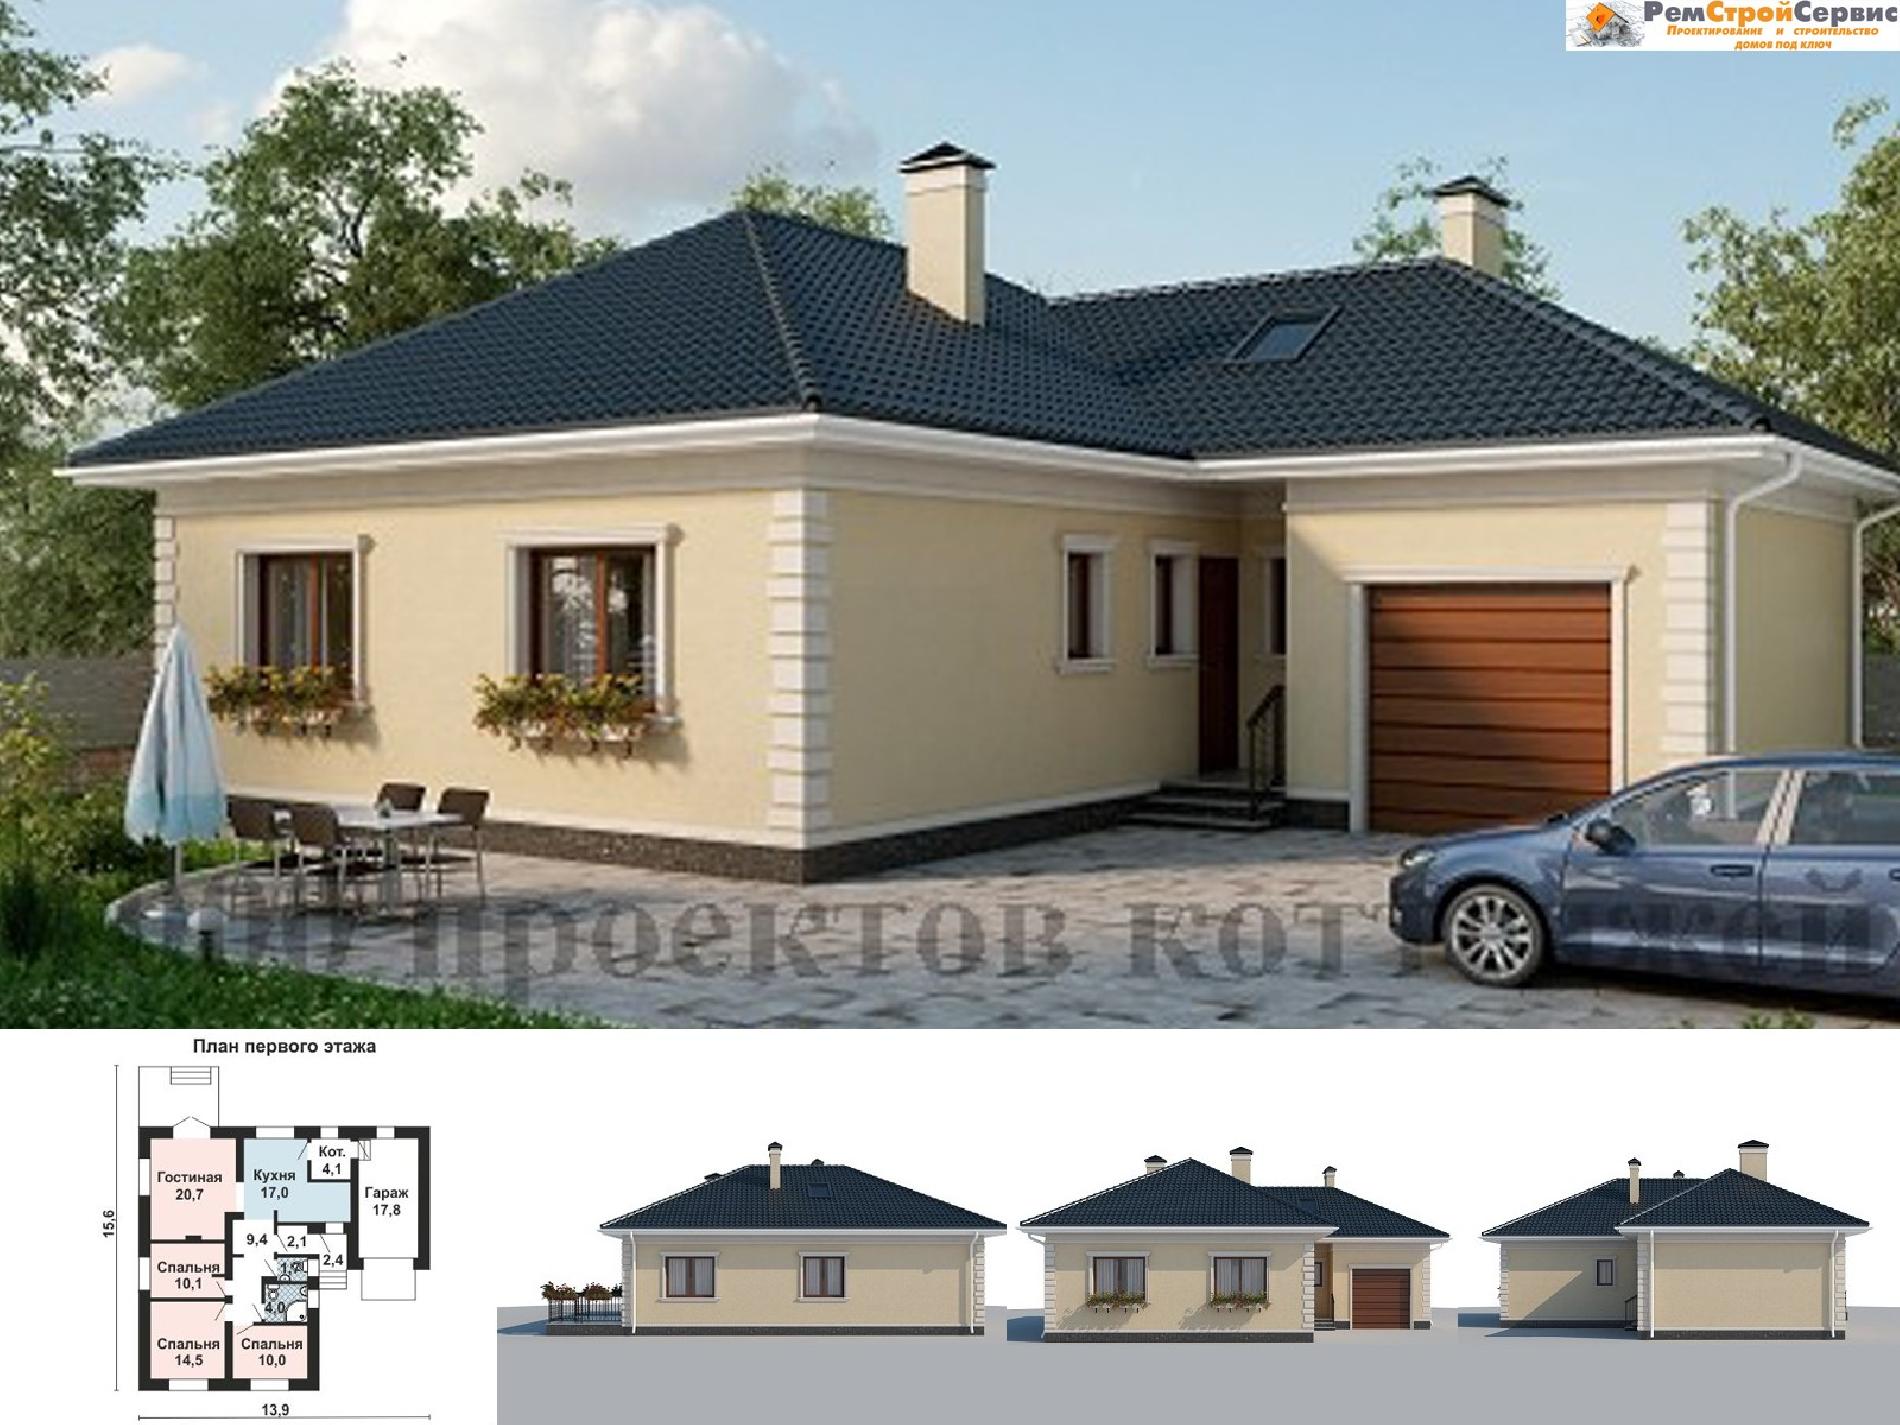 Проект дома №as-2174 proect_as-2174.jpg